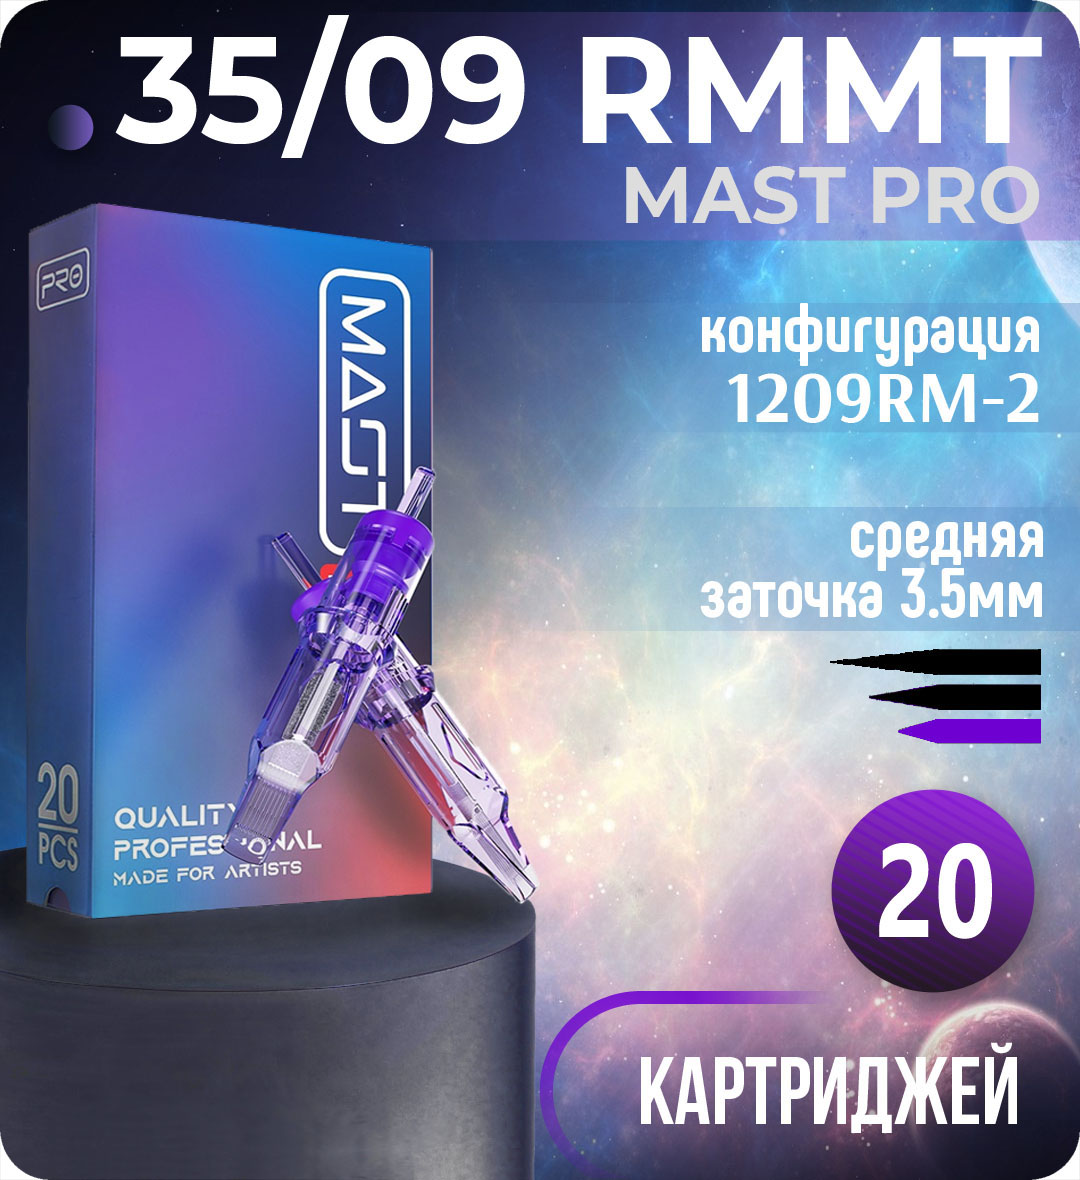 Картриджи Mast Pro 35/09 RMMT (1209RM-2) для тату, перманентного макияжа и татуажа Dragonhawk 20шт